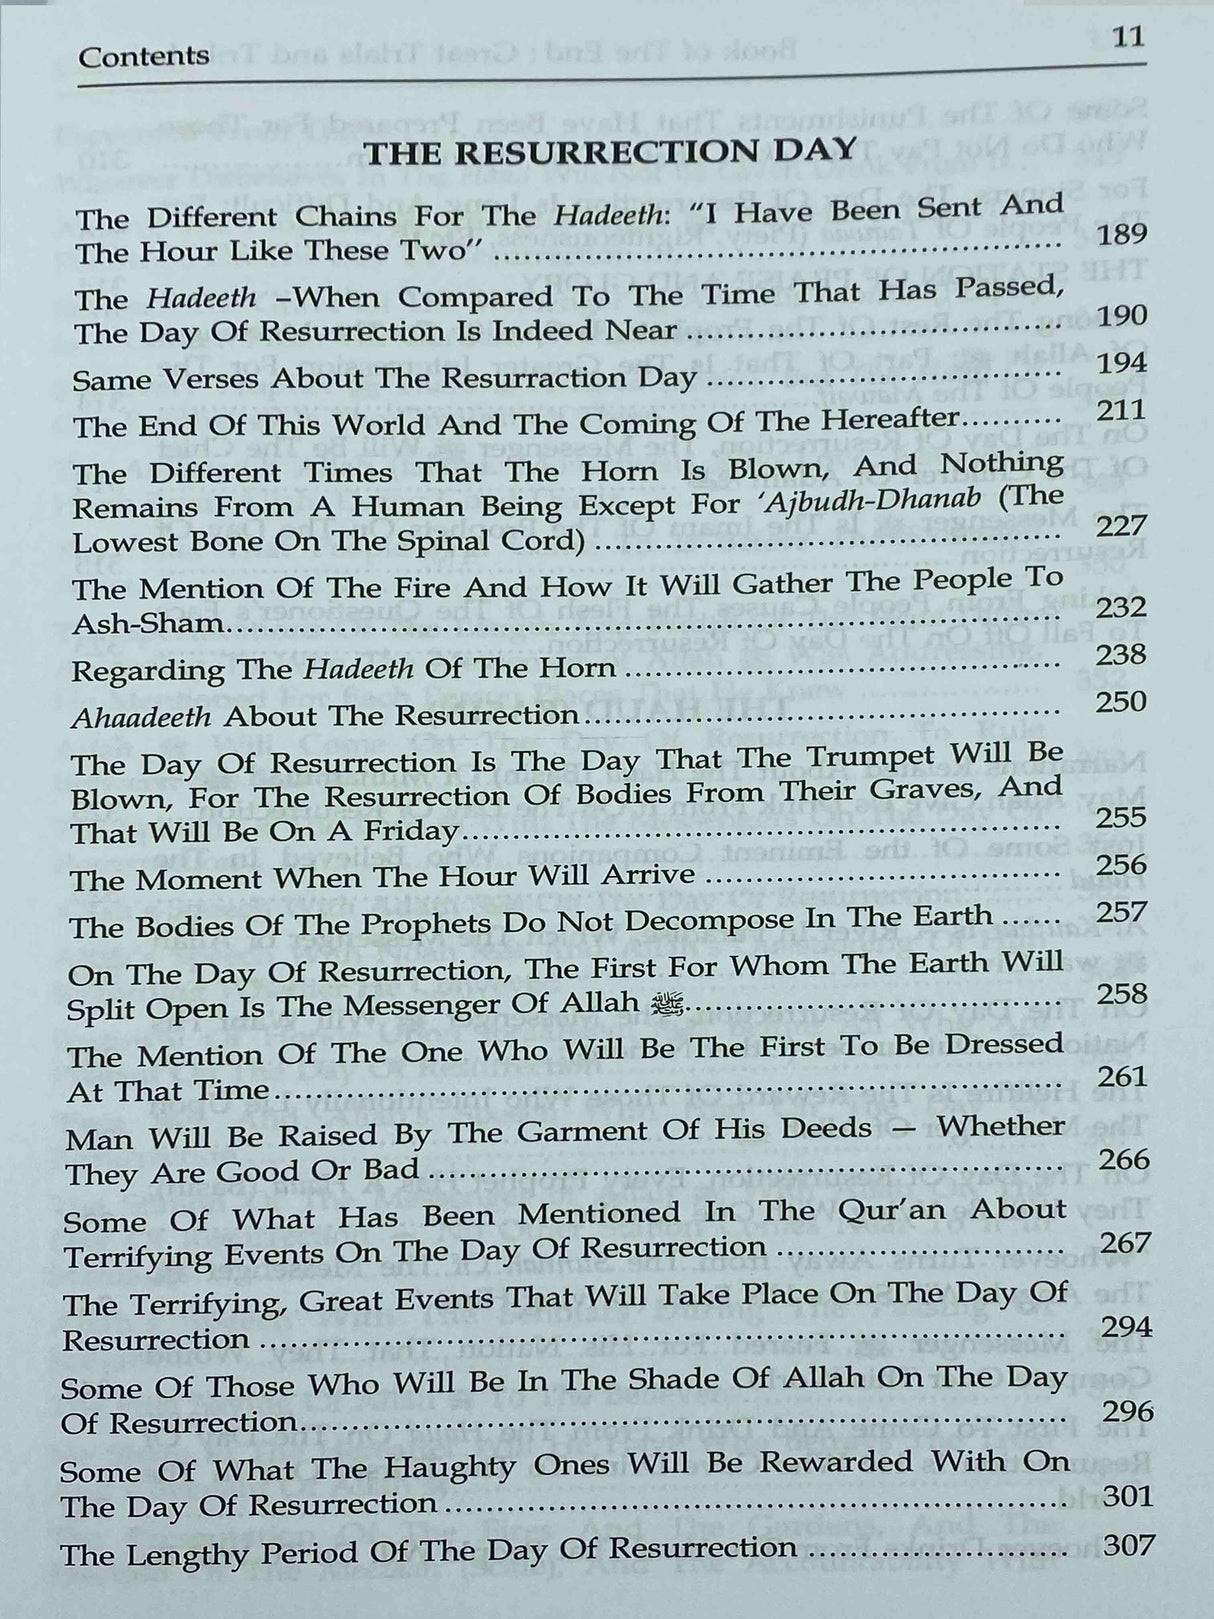 Book of the End - Great Trials and Tribulations (Al Bidaya Wan Nihaya)